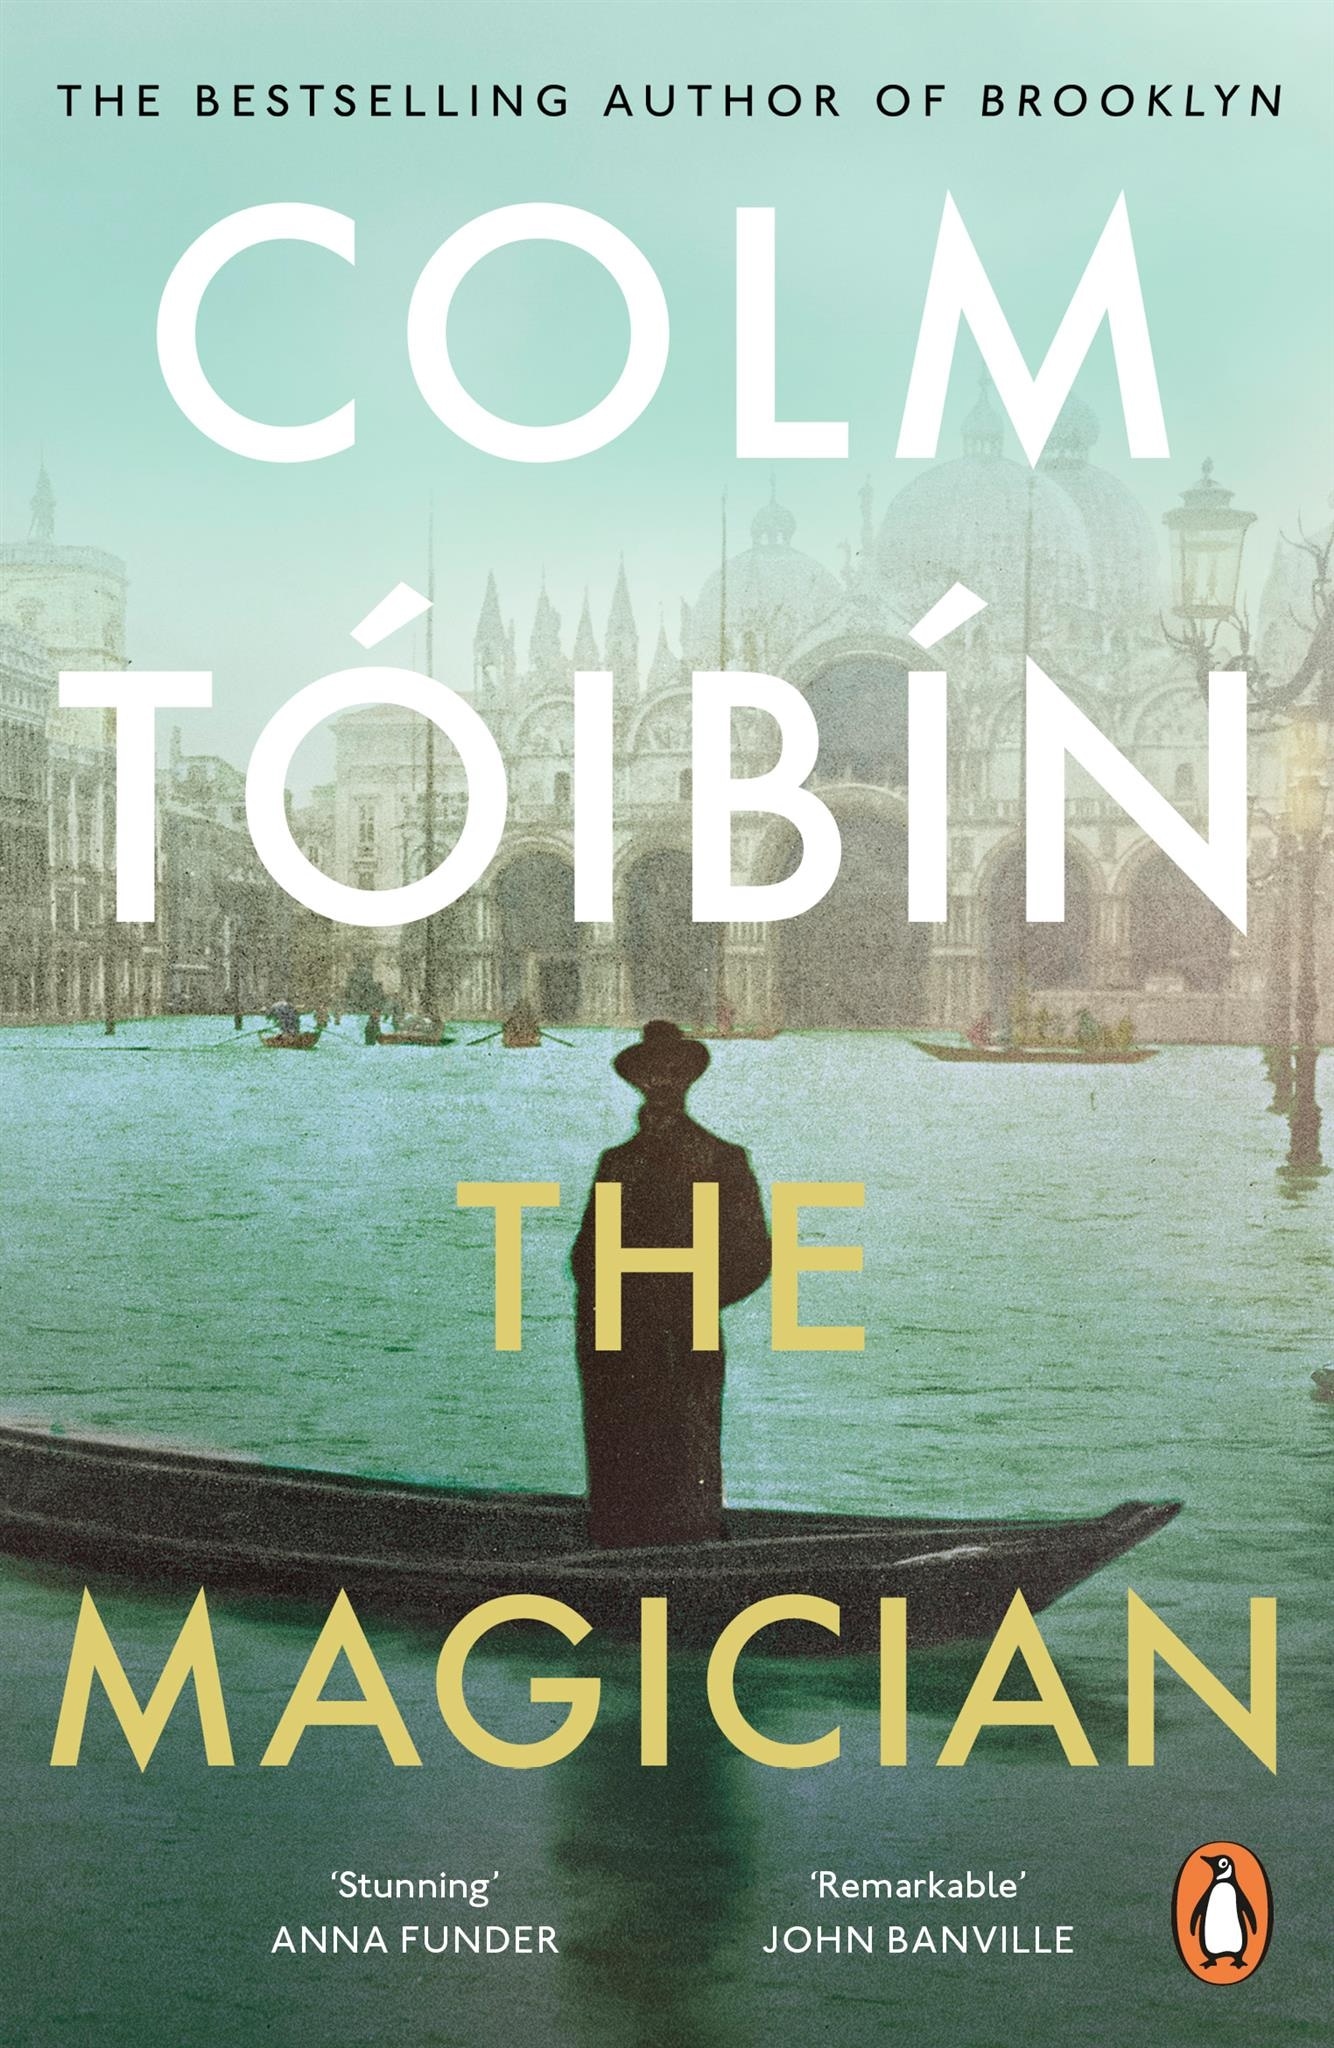 Book “The Magician” by Colm Tóibín — March 3, 2022